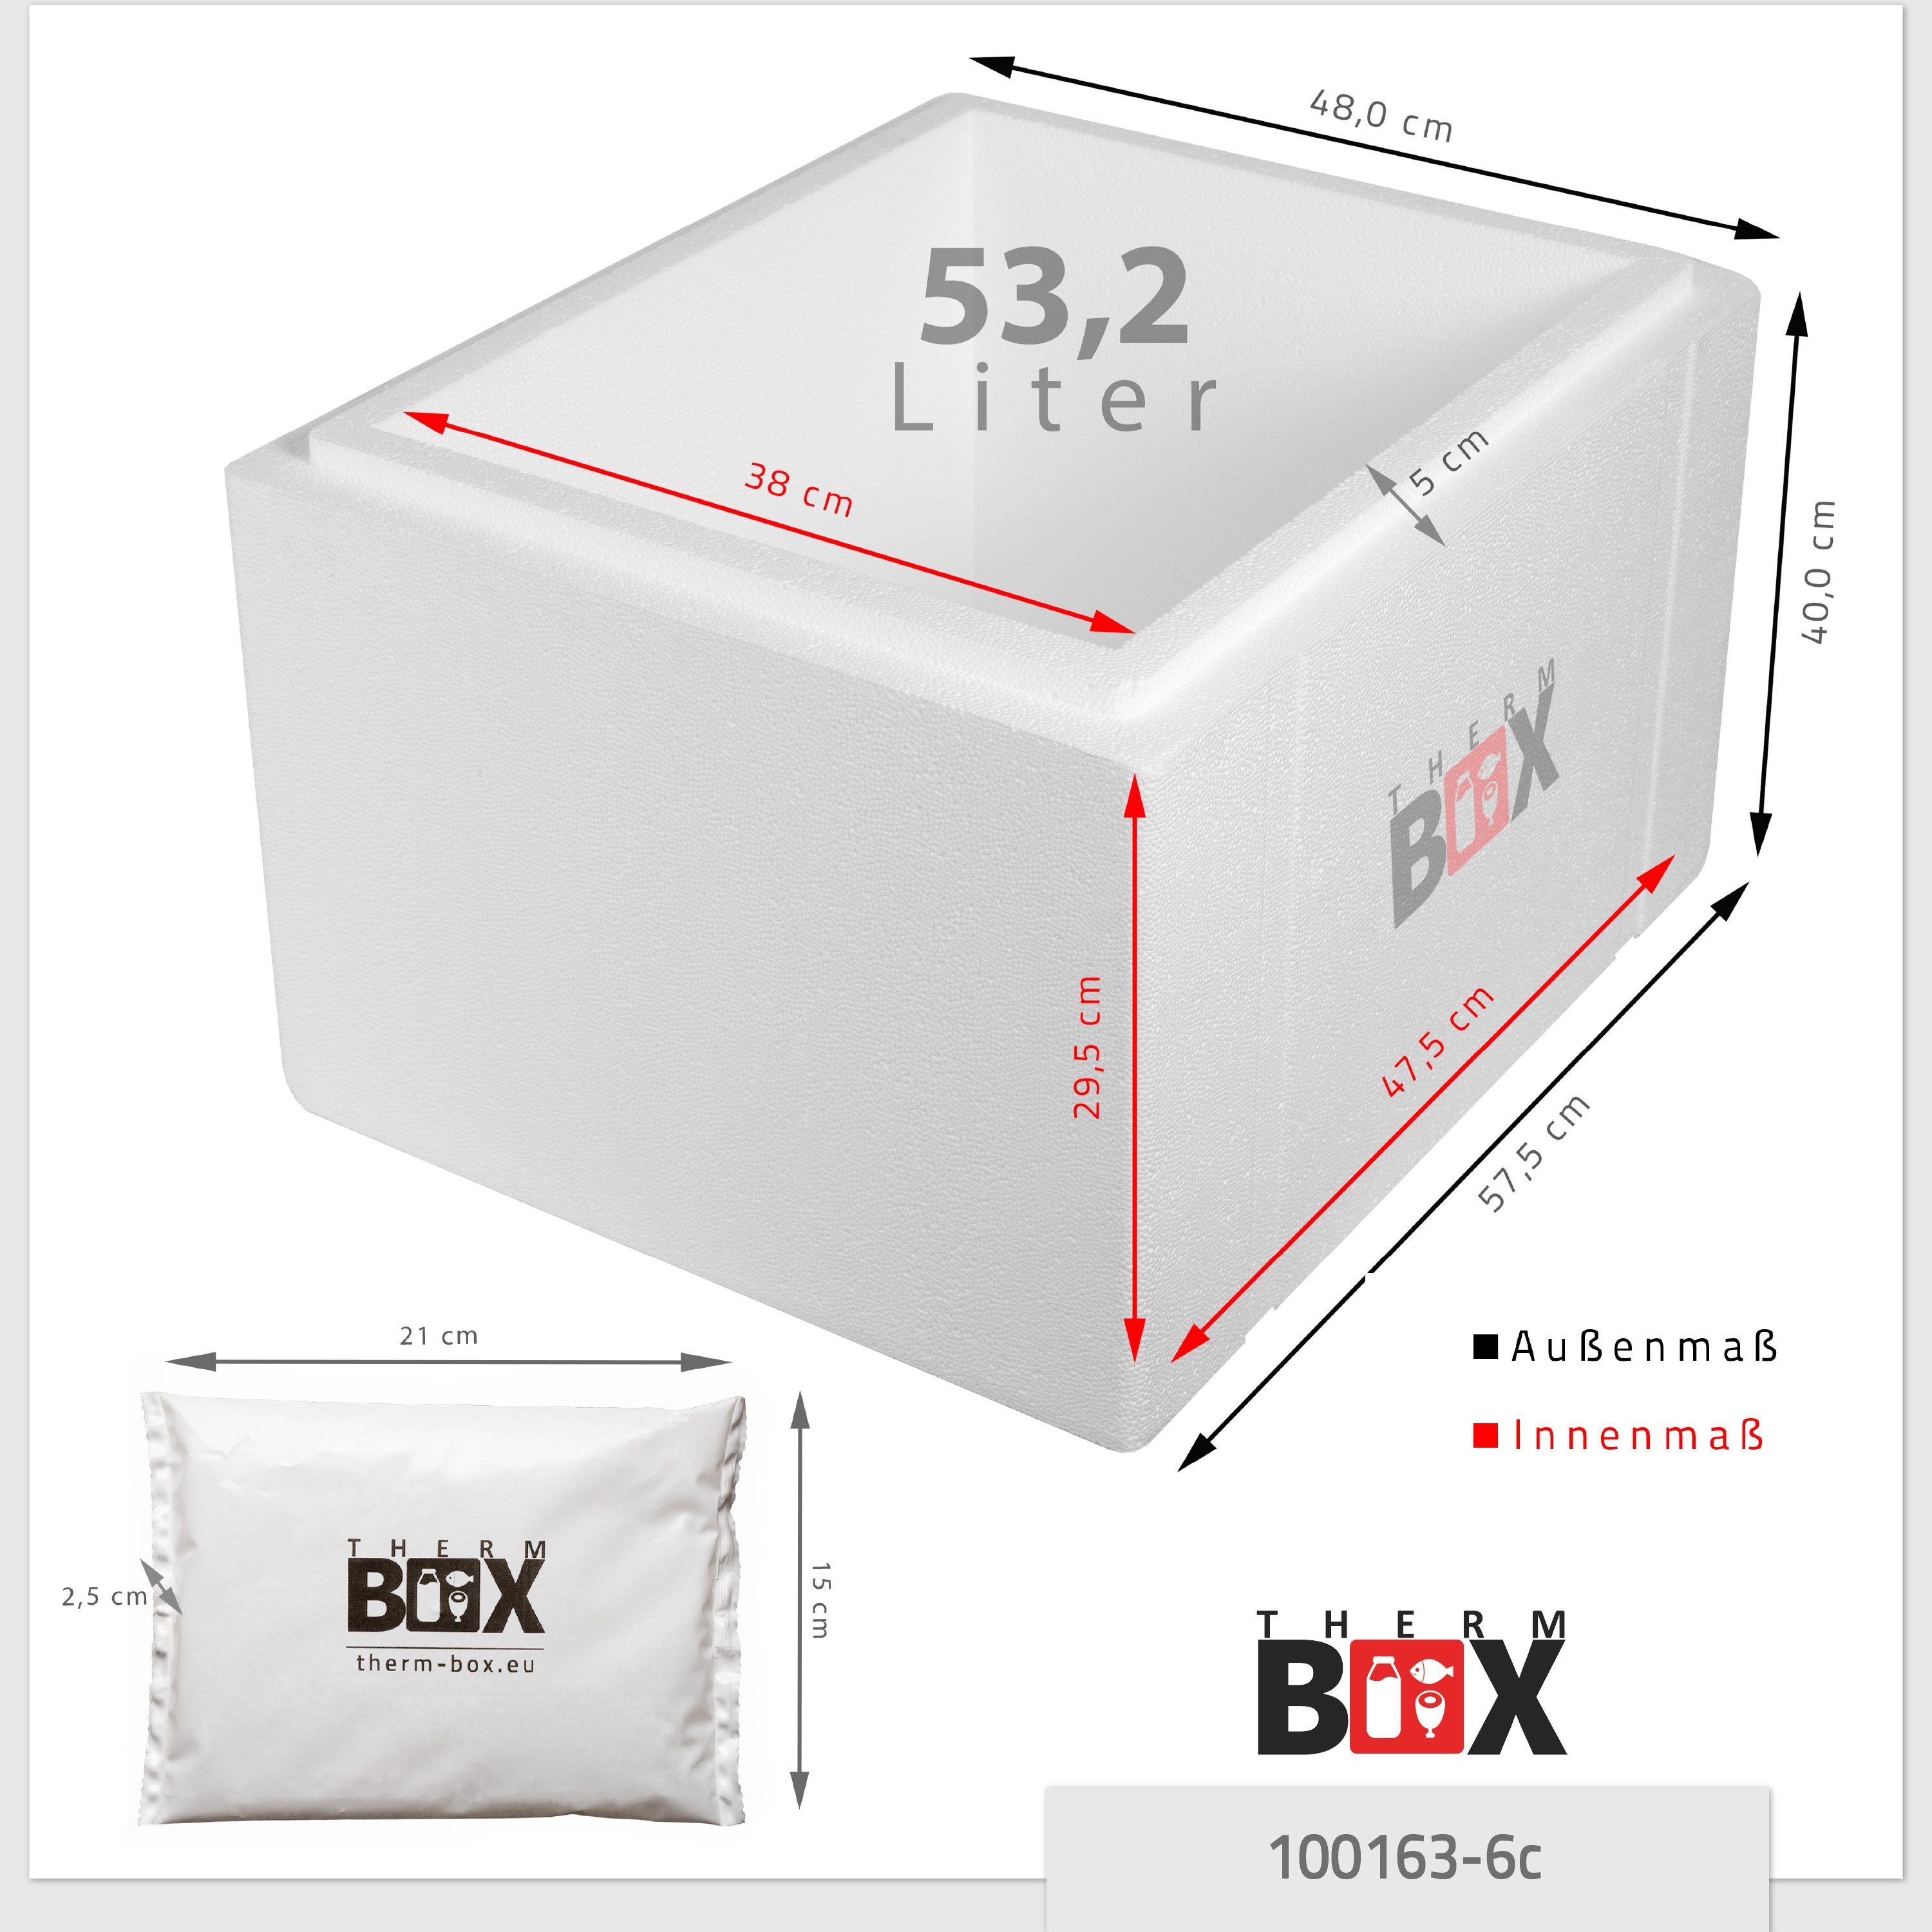 Kühlbox 6 (0-tlg., Innen: 53,24L Thermbehälter Styroporbox Kühlkissen, mit Thermobehälter Kühlkissen), Transportbox 47x38x29cm Thermbox Styropor-Verdichtet, Kühlakku THERM-BOX mit 53W